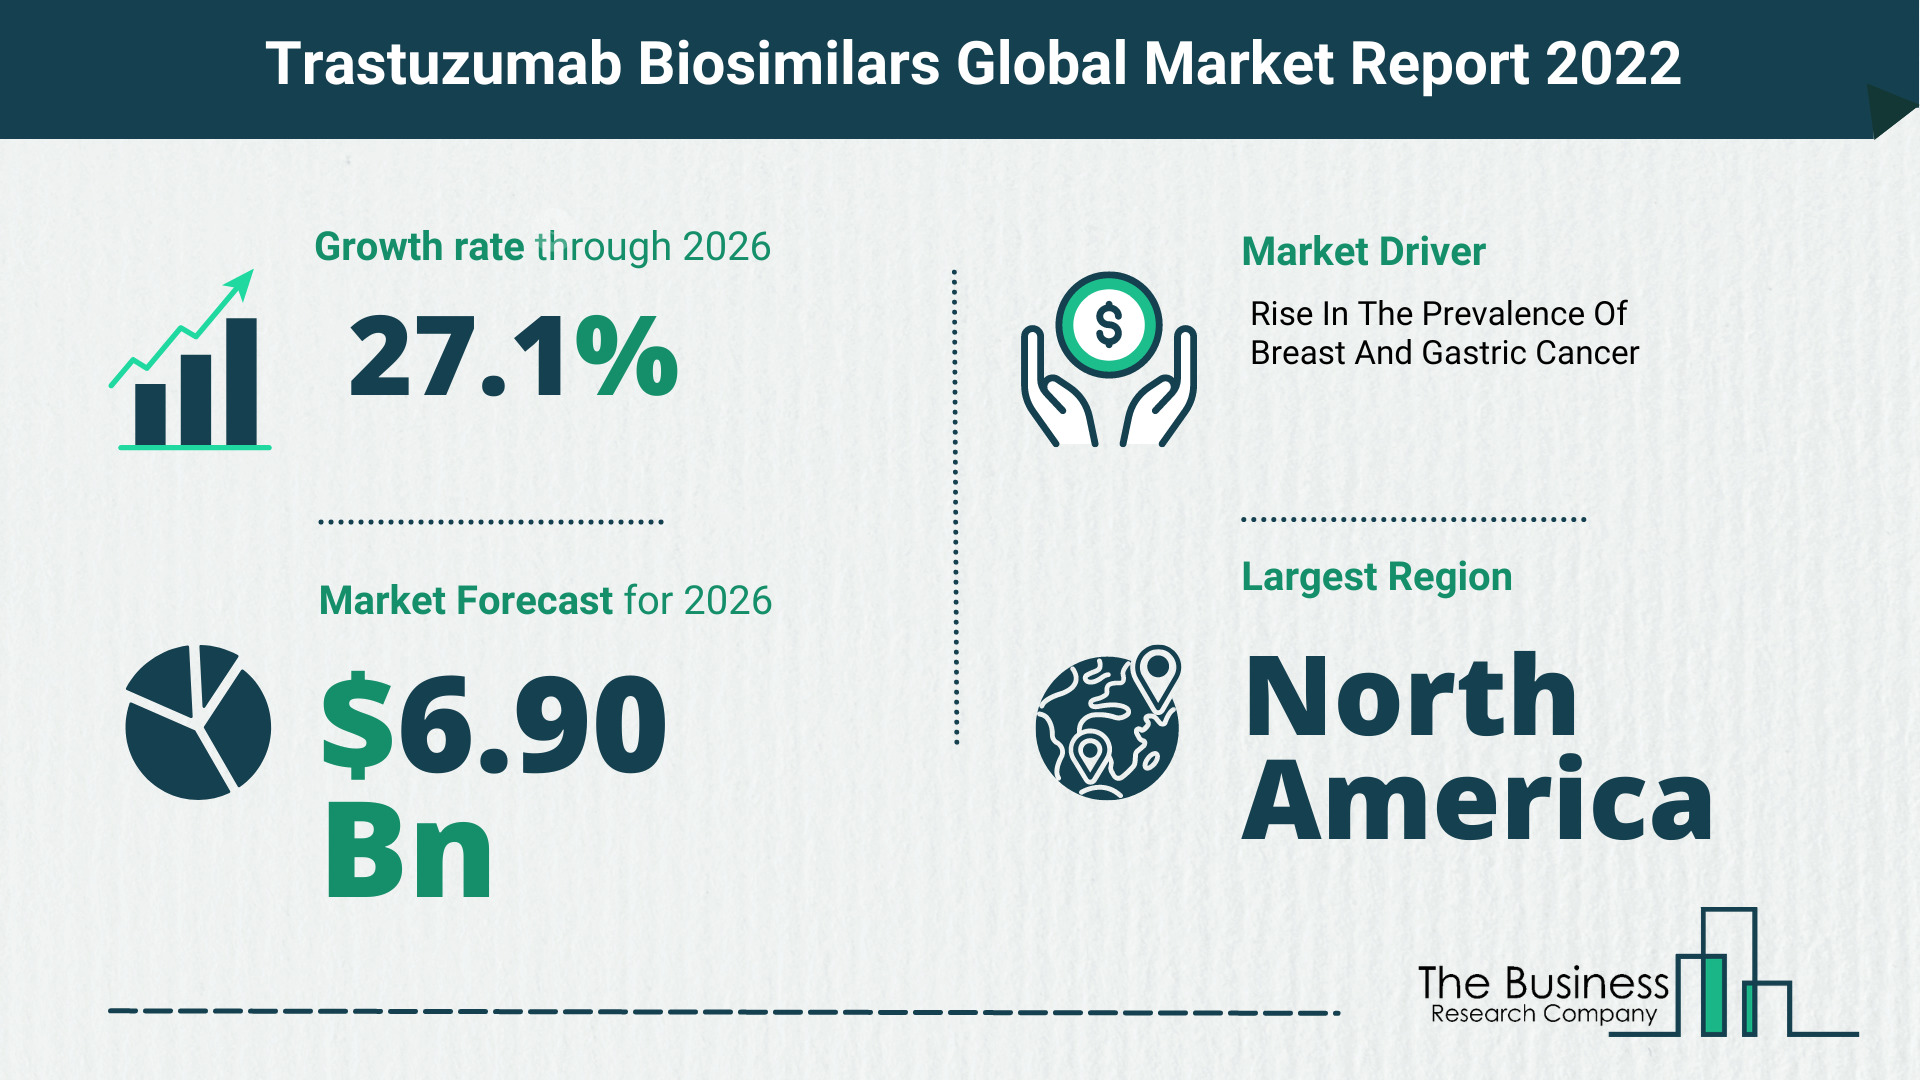 The Trastuzumab Biosimilars Market Share, Market Size, And Growth Rate 2022